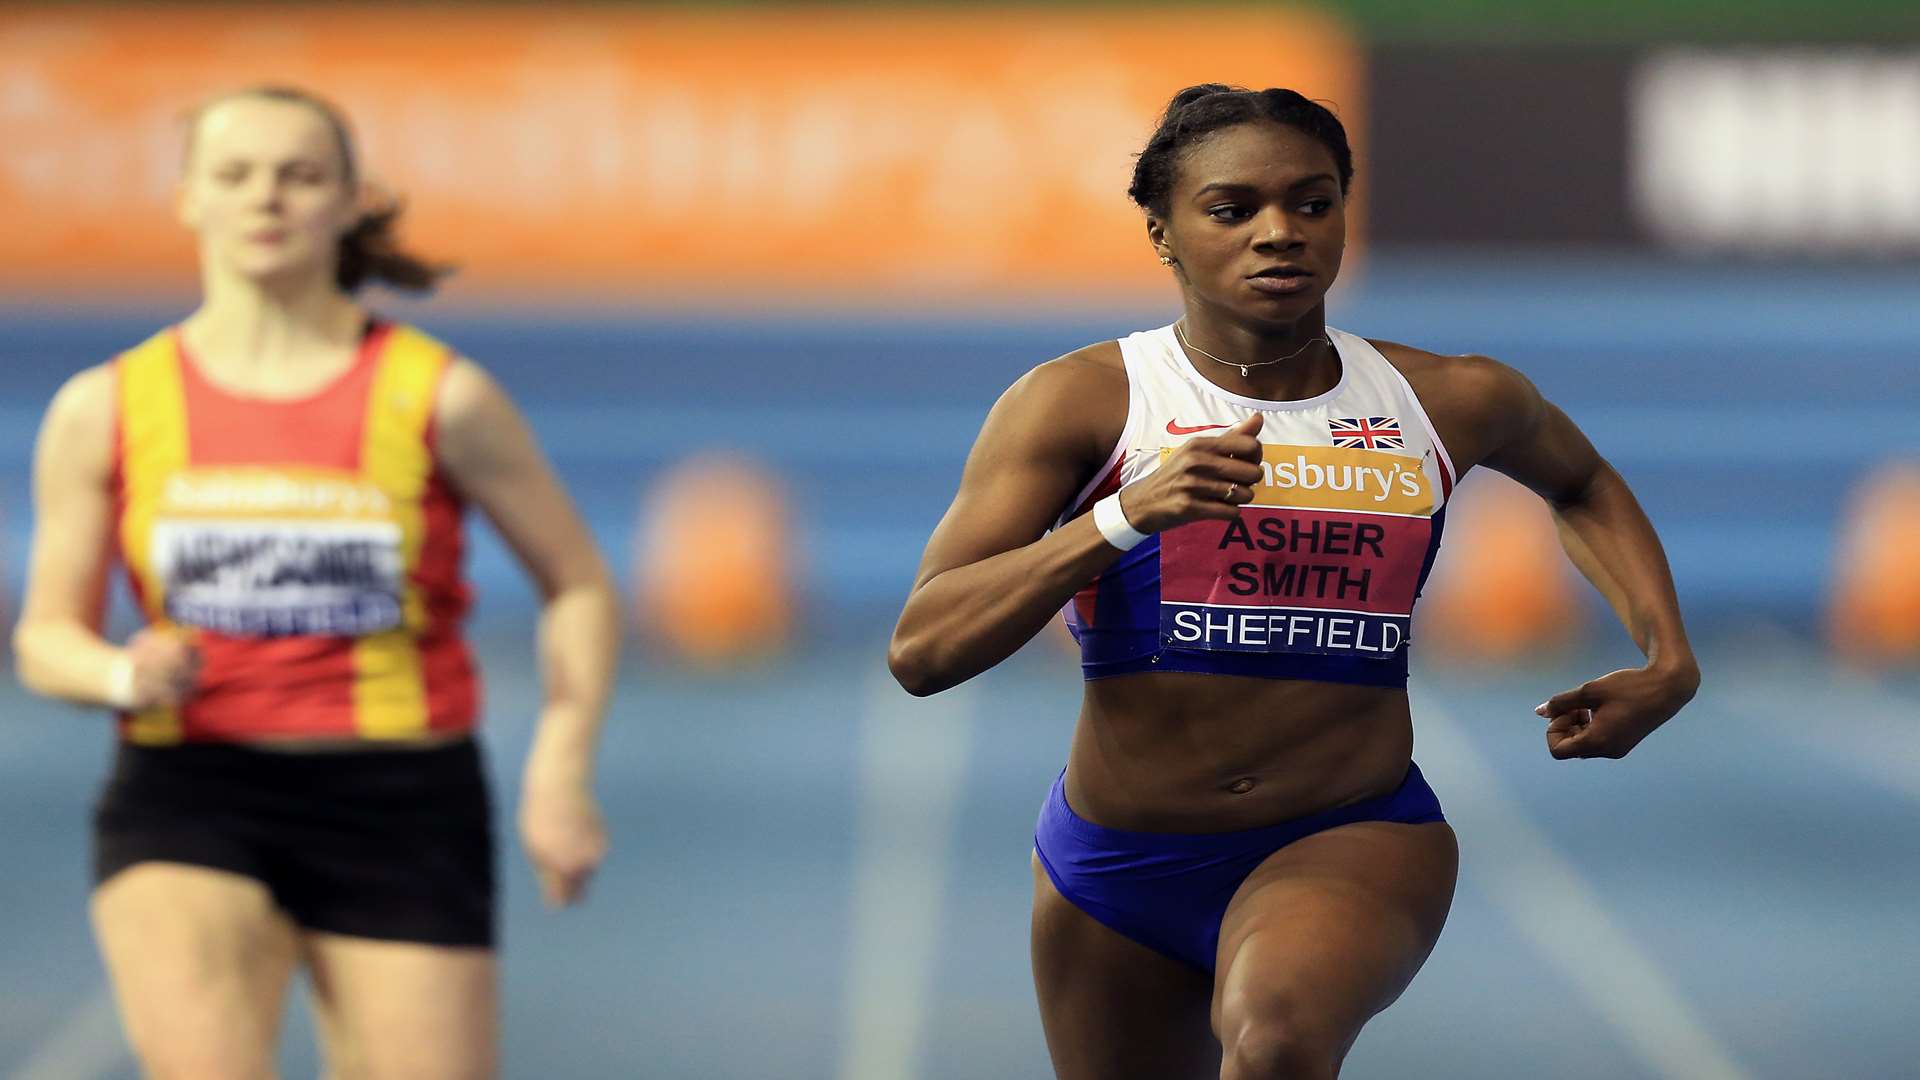 Dina Asher-Smith broke the British 200m record at the World Athletics Championships